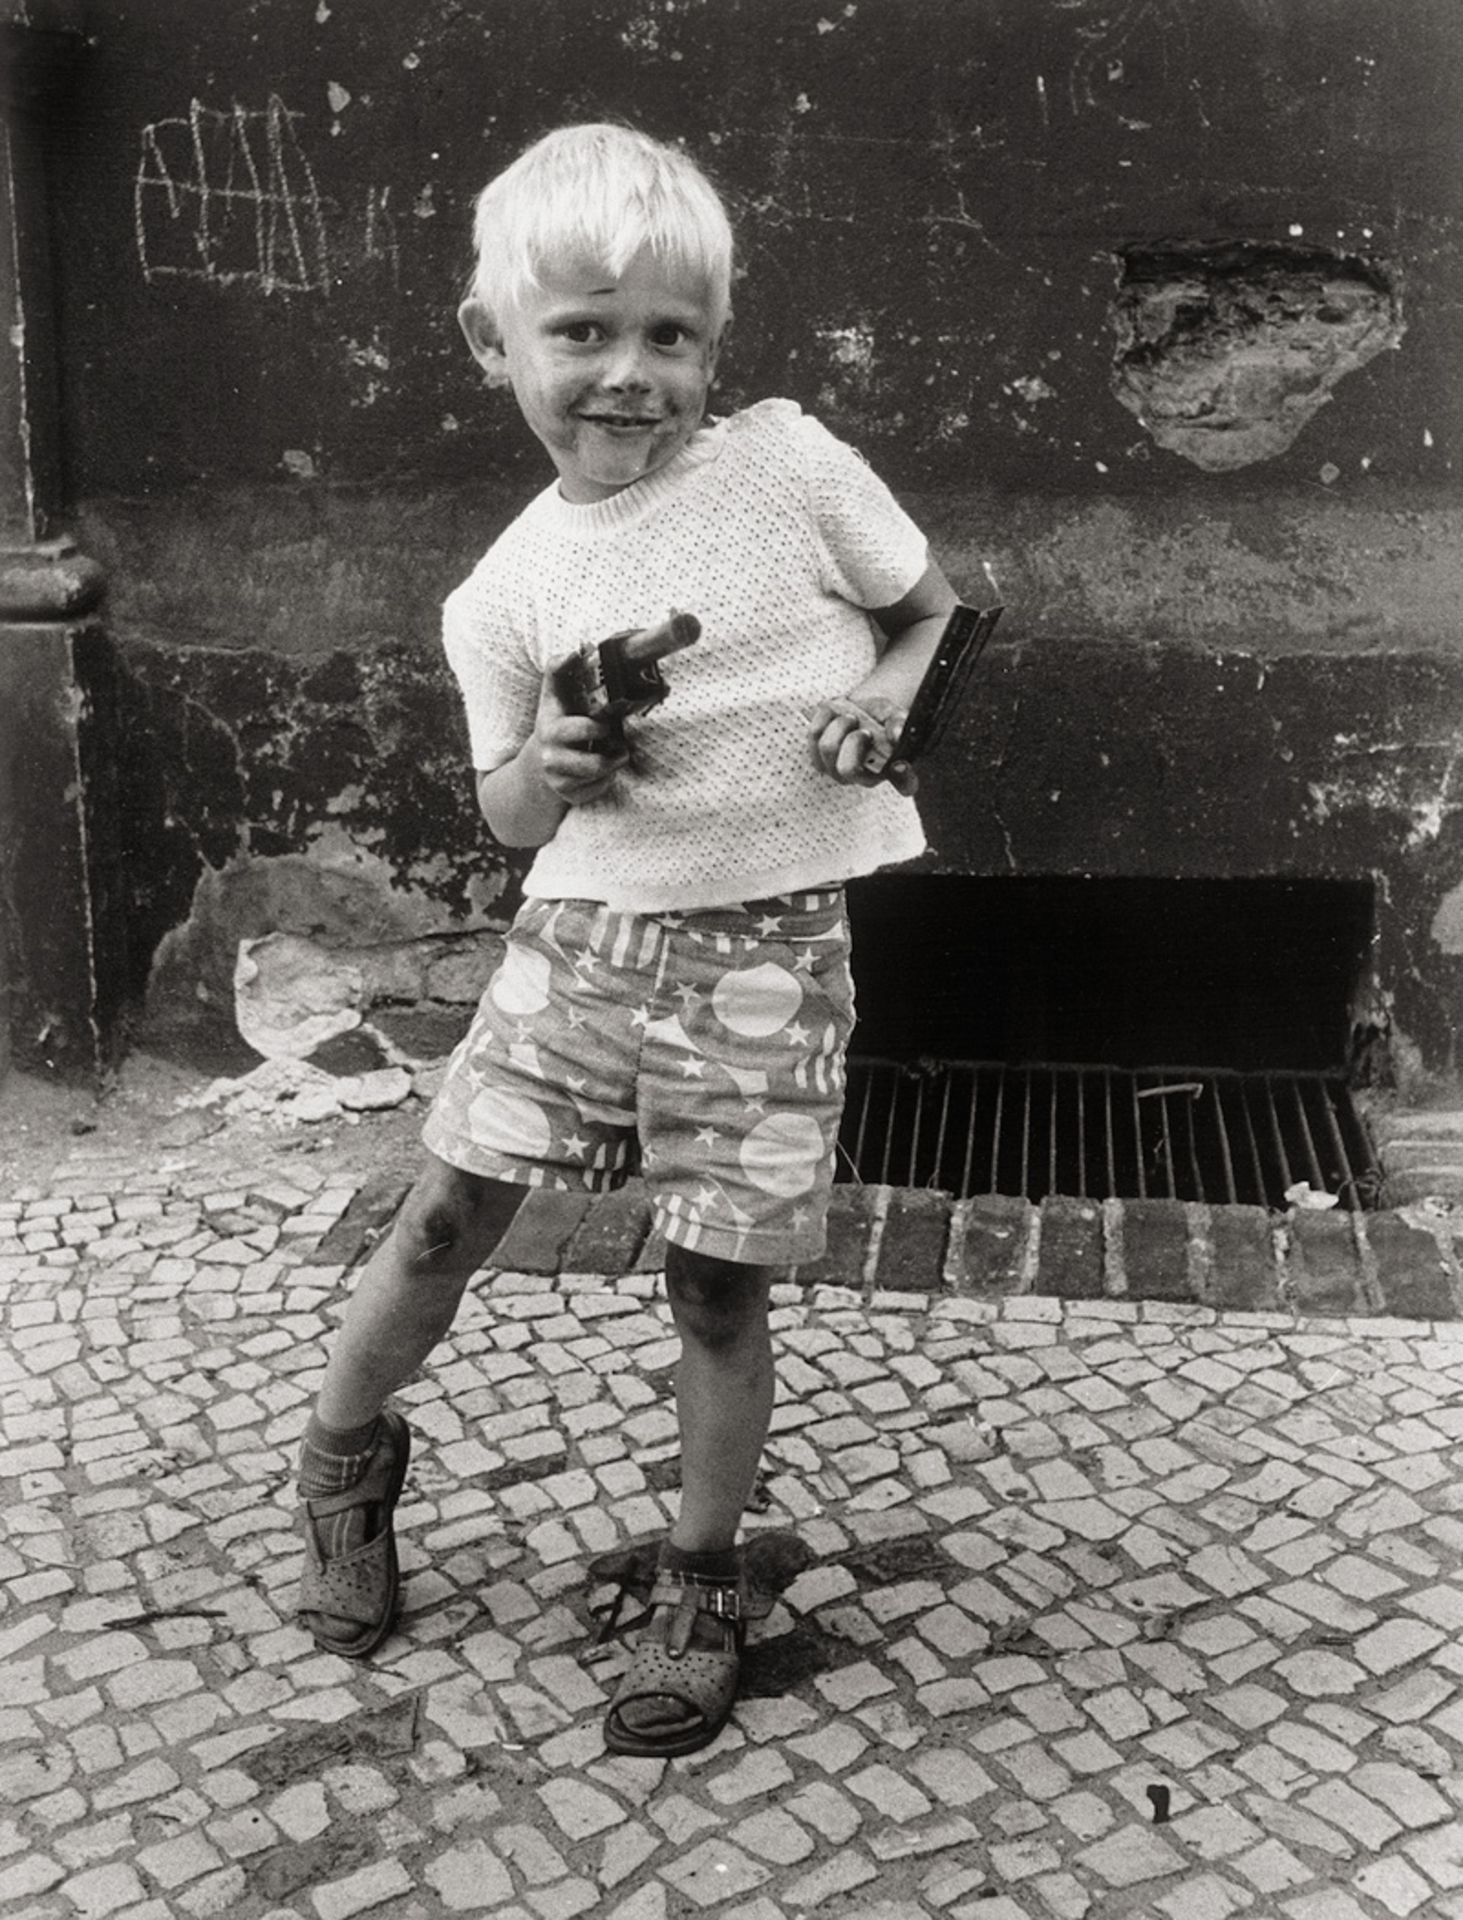 Christel, Detlef: Boy with toy gun, Berlin